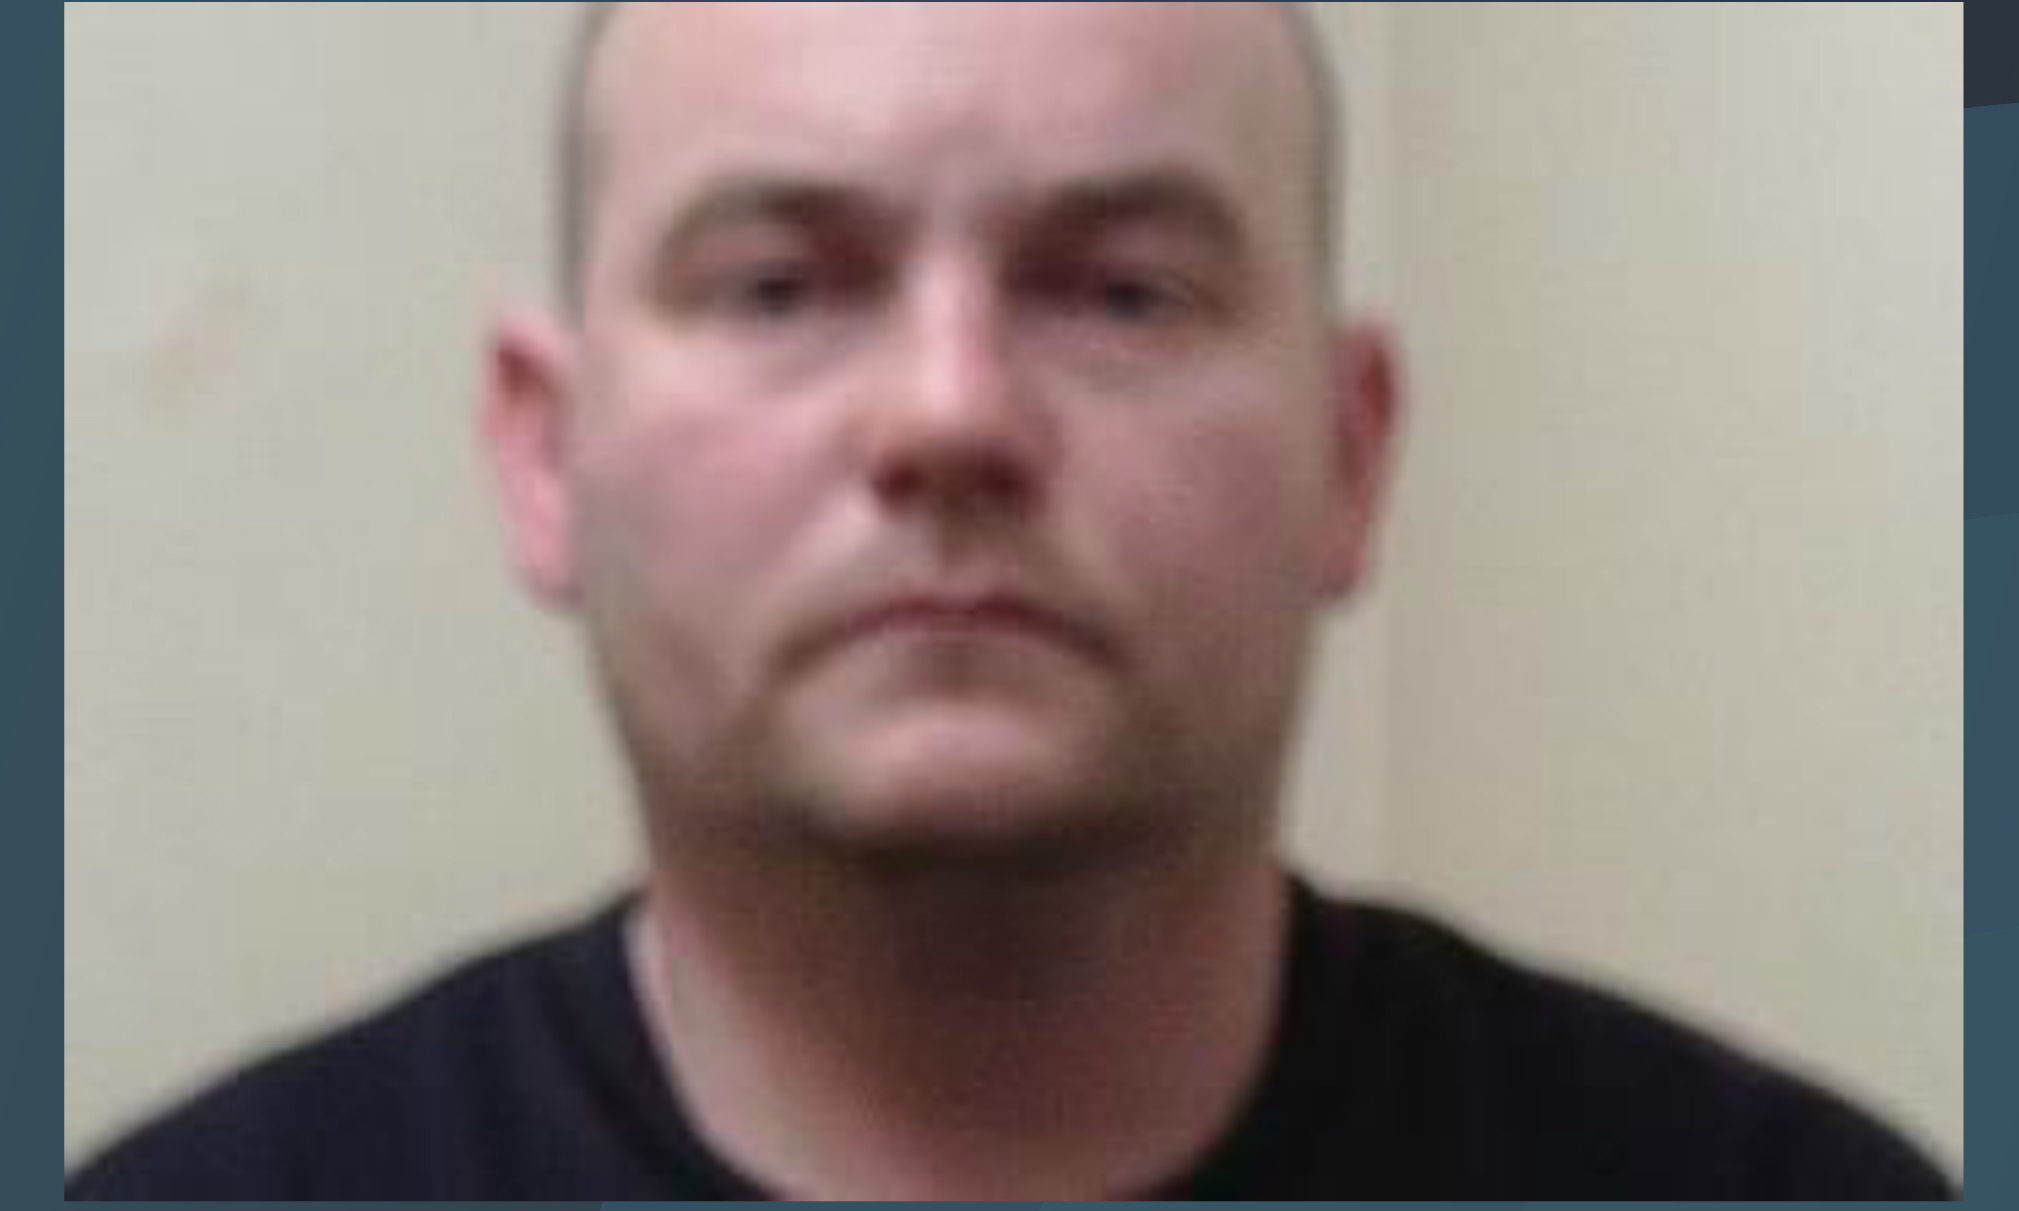 Ewan McDowall has been jailed at Kirkcaldy Sheriff Court.